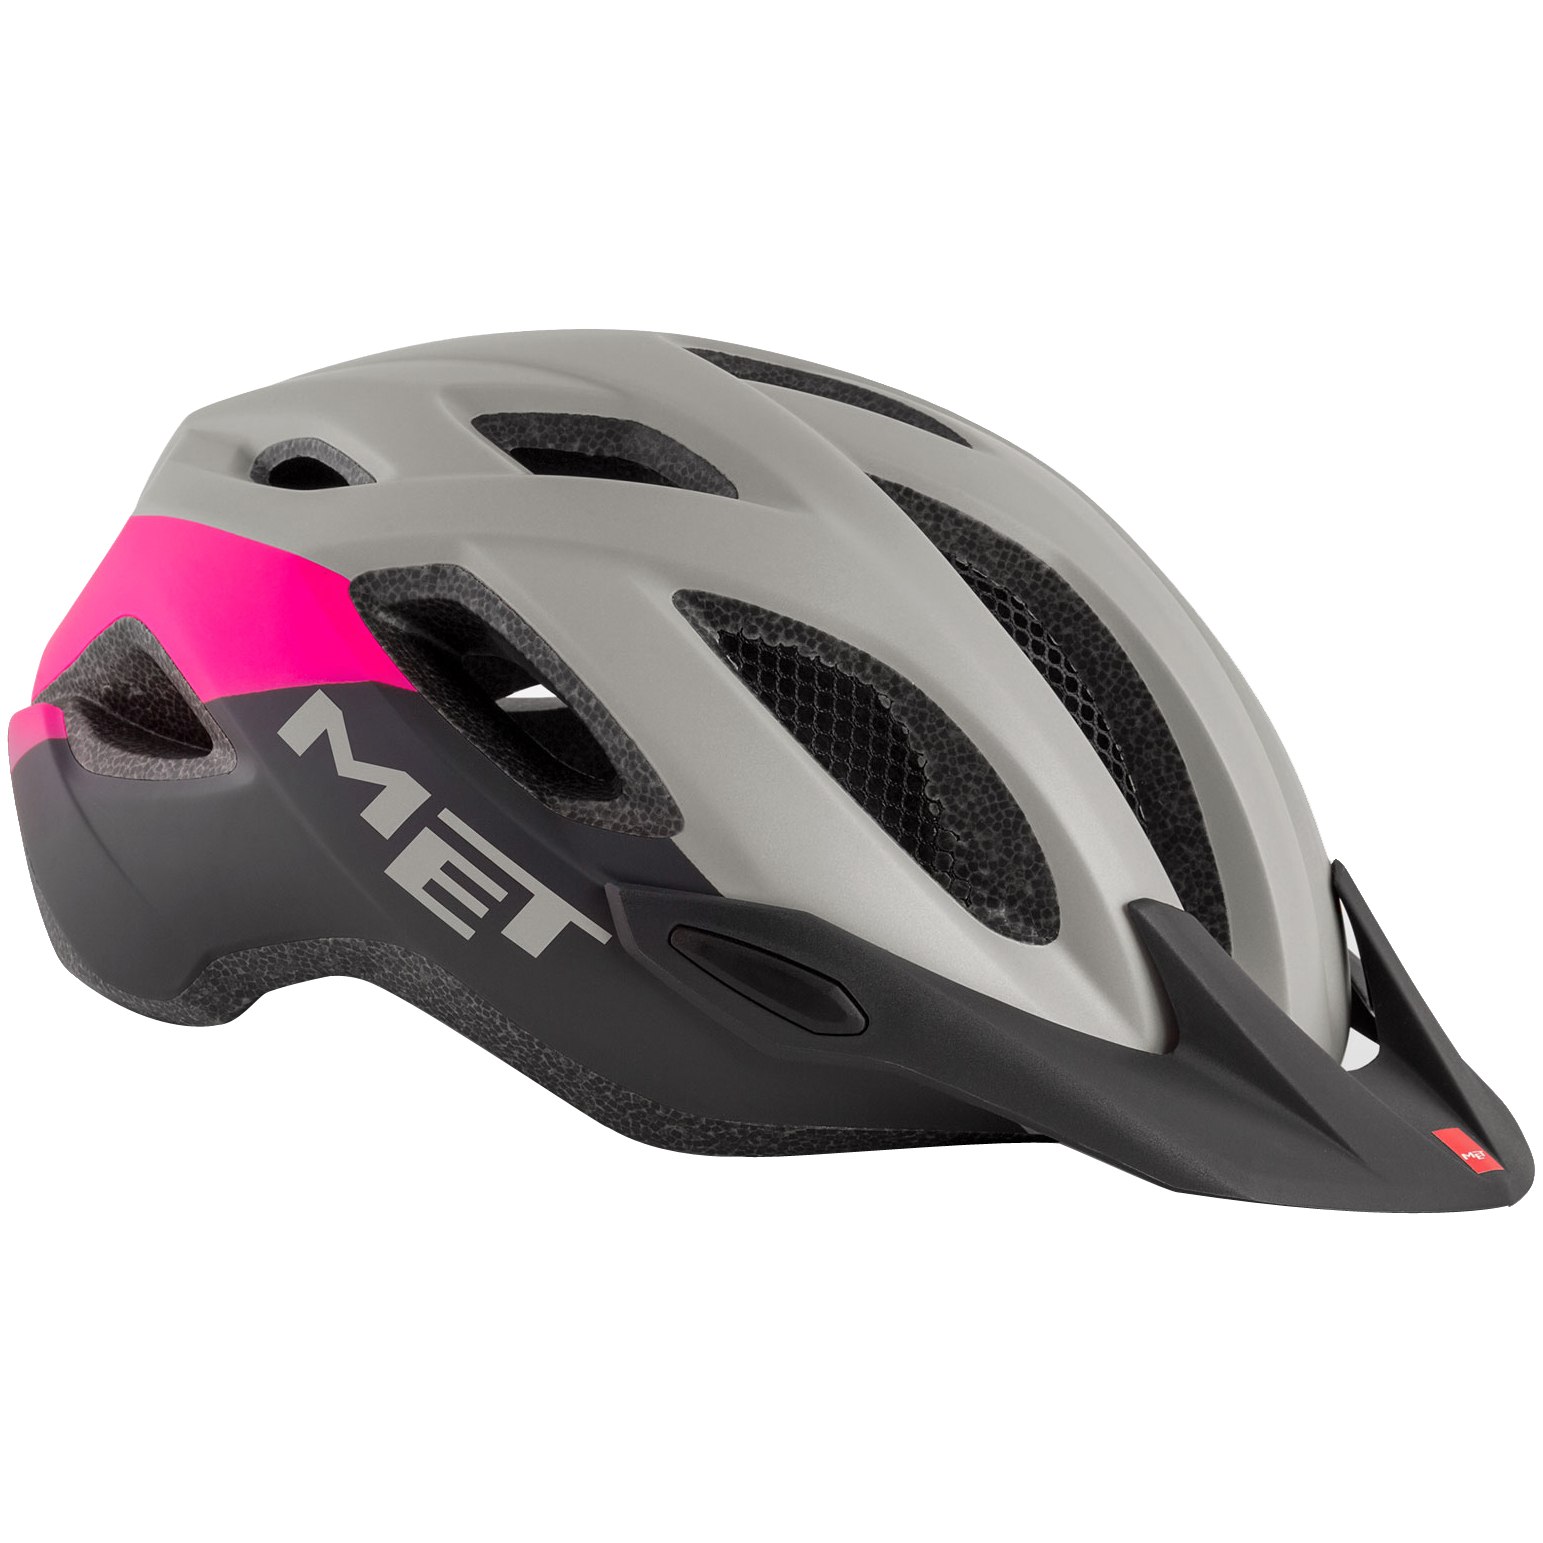 Produktbild von MET Crossover Helm - Gray Pink Matt